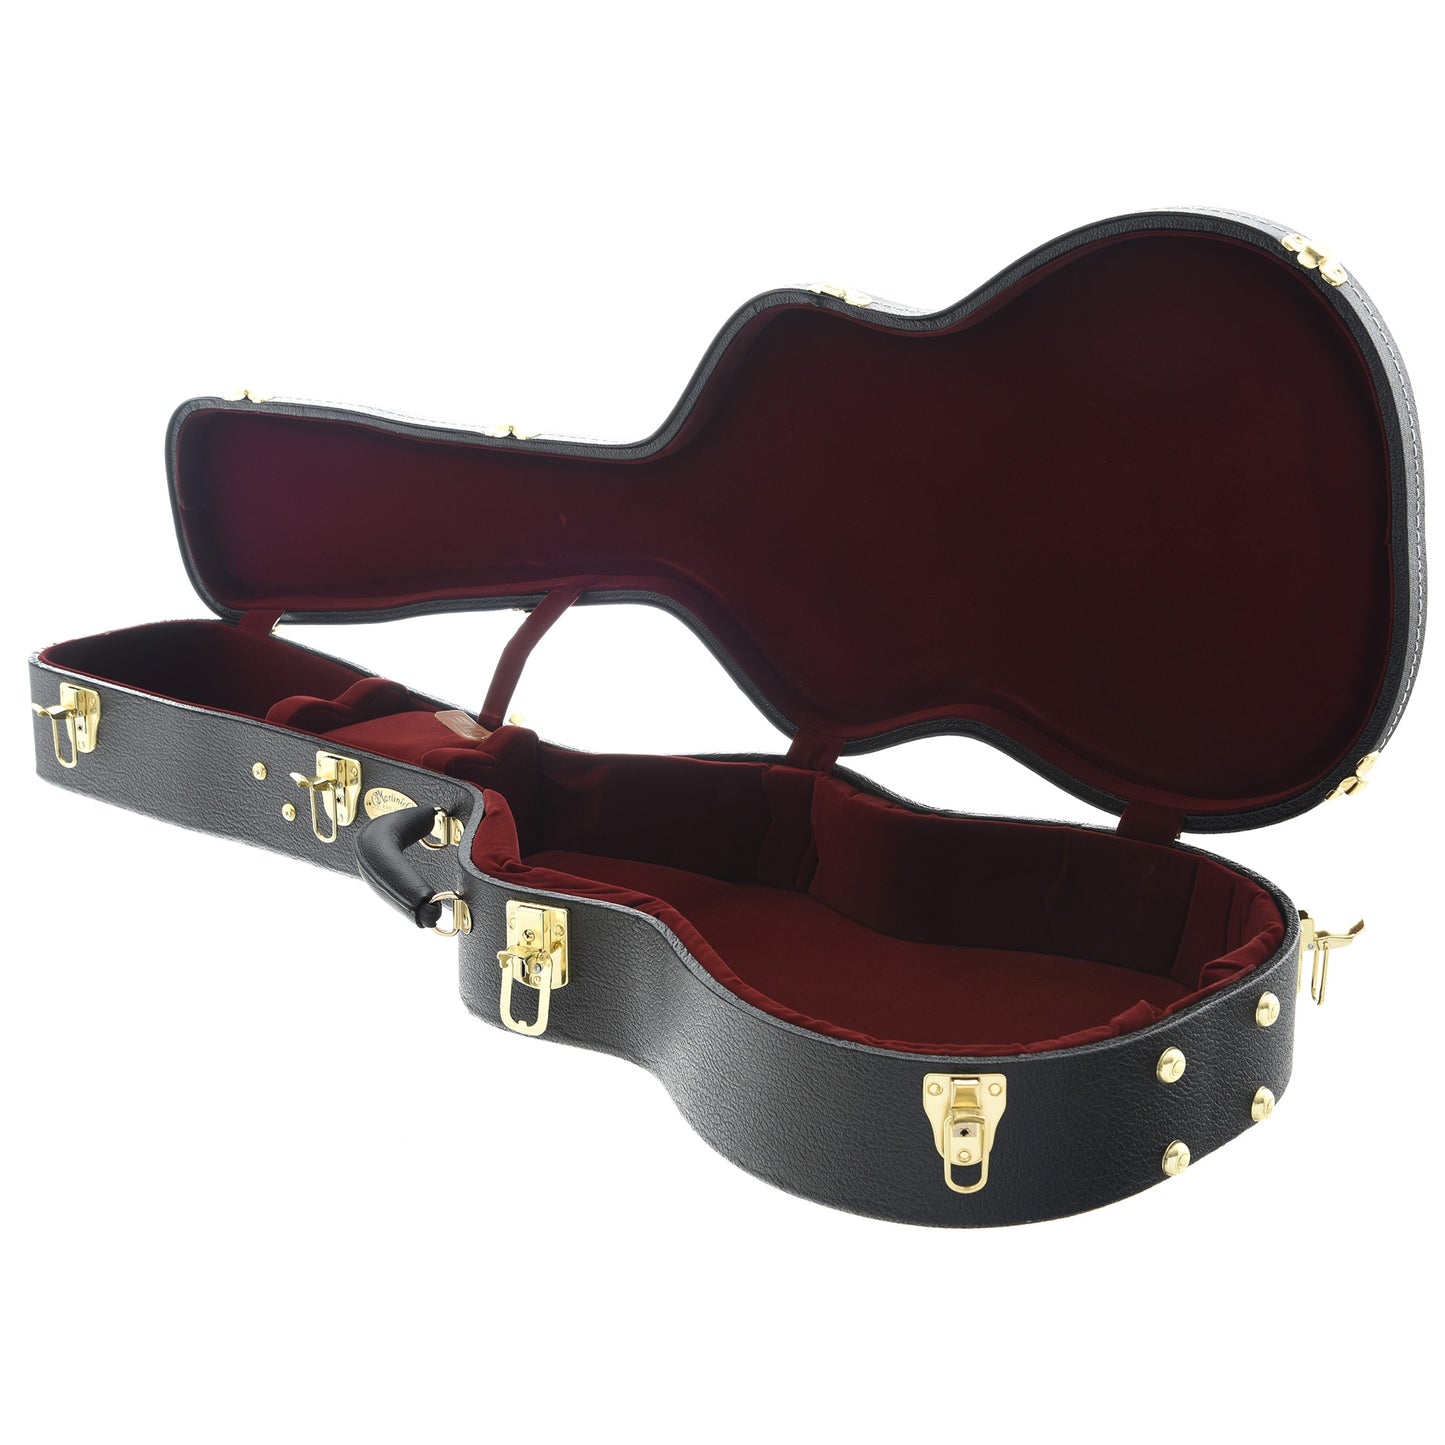 Full Inside and Side of Martin Vintage 0-Size Guitar Case